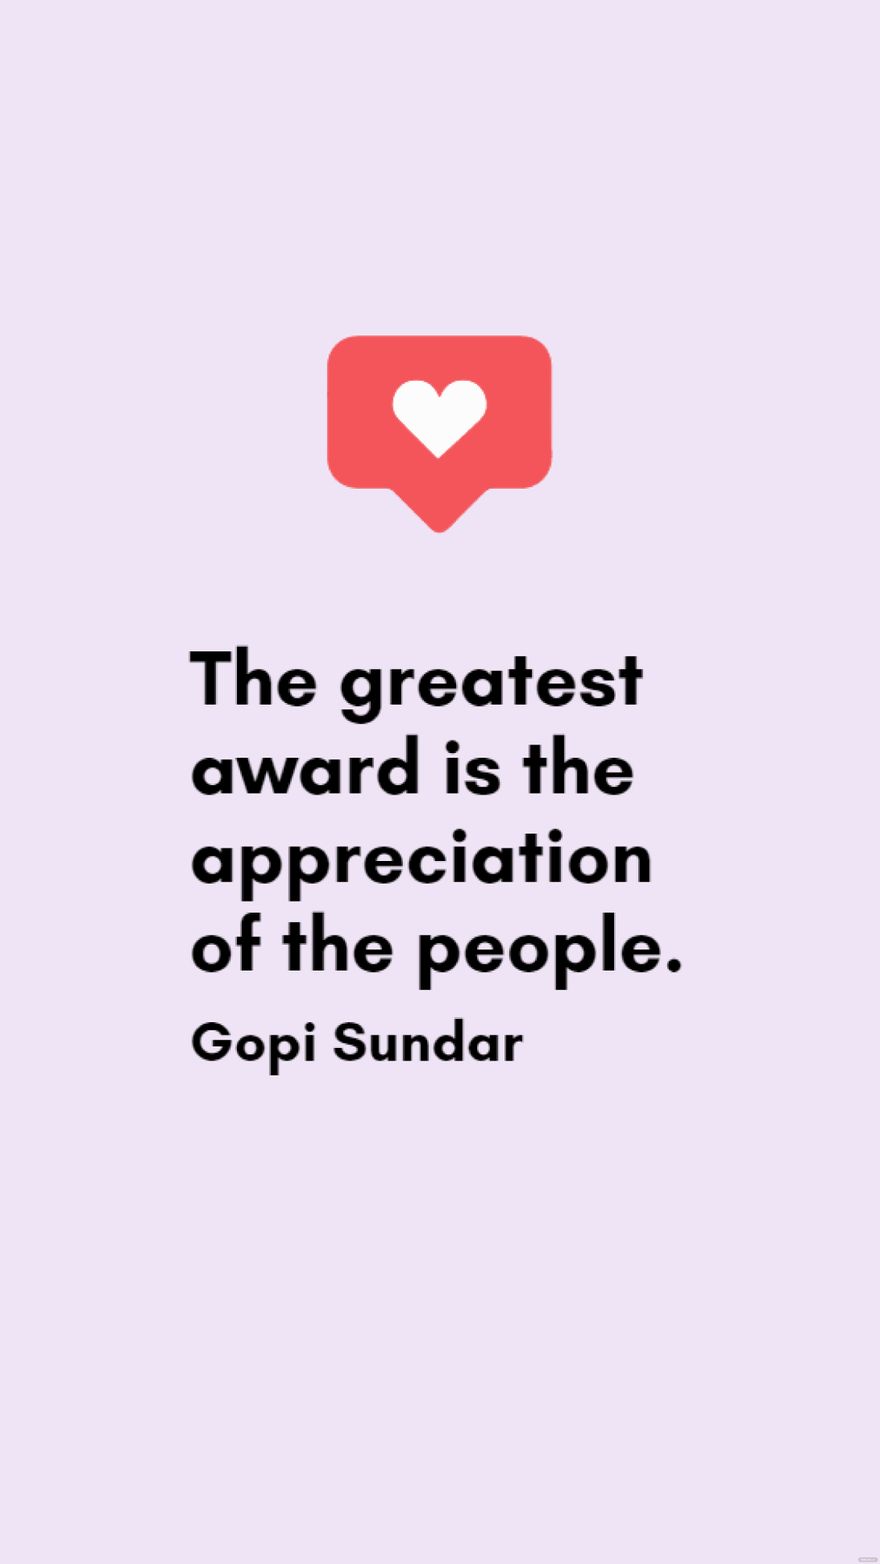 Gopi Sundar - The greatest award is the appreciation of the people. in JPG